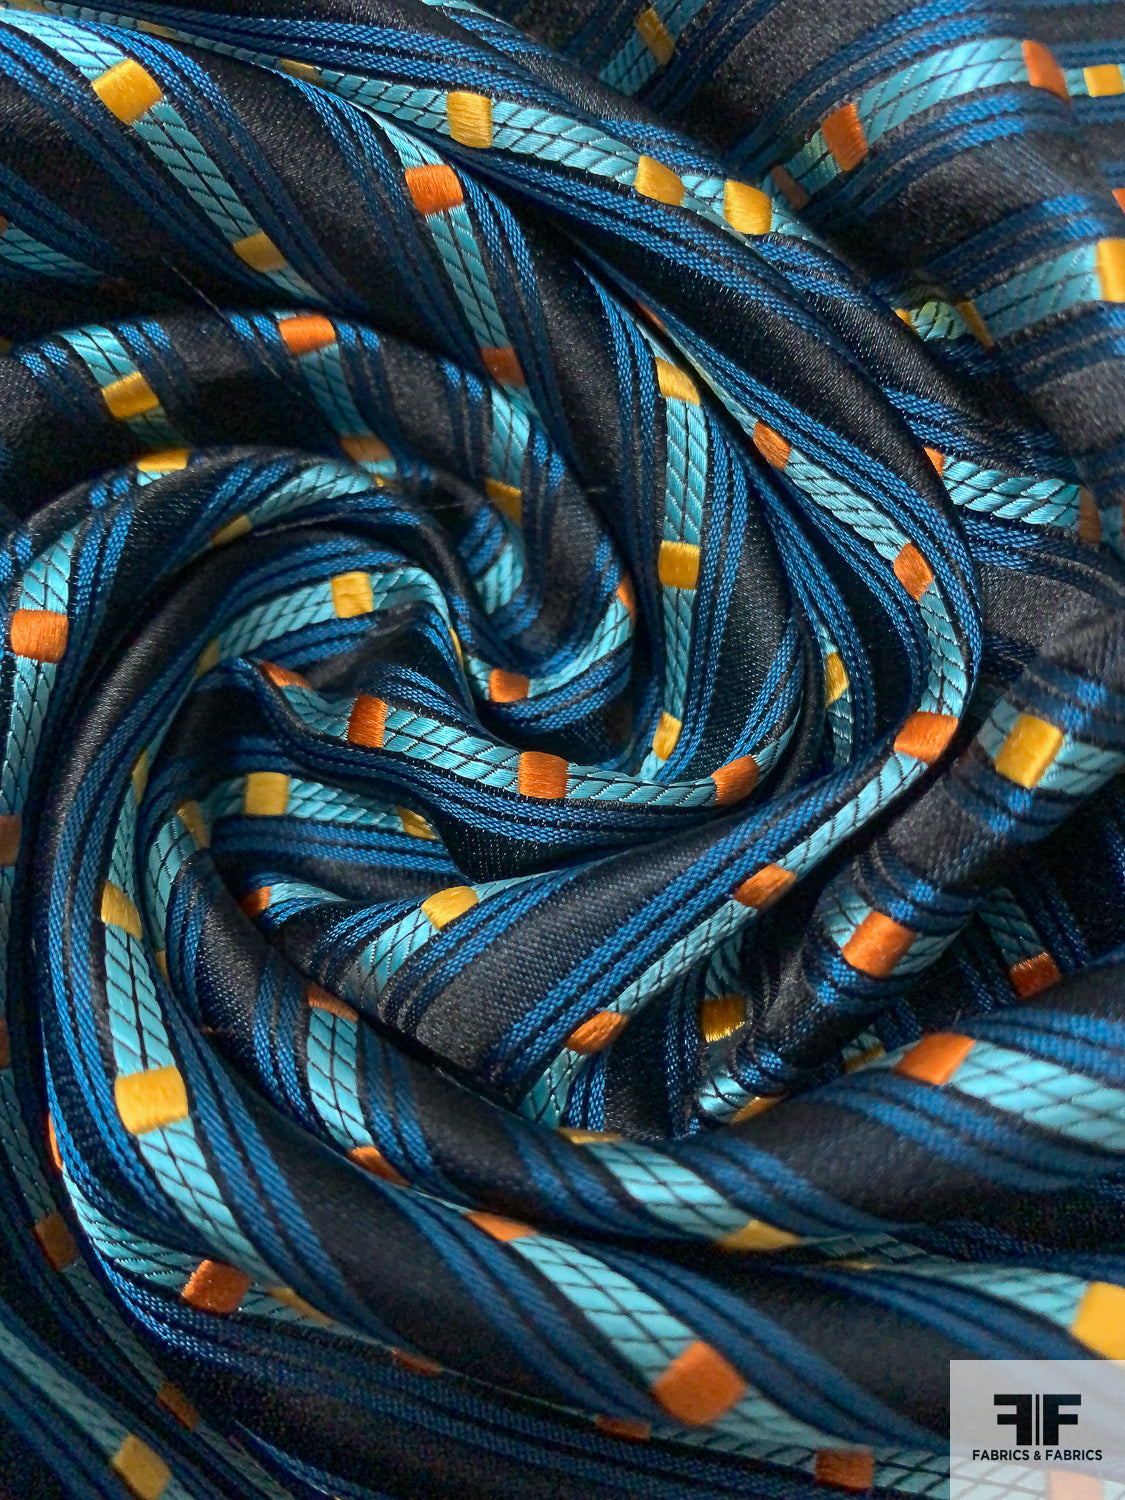 Box Striped Silk Necktie Jacquard Brocade - Teal / Seafoam / Black / Orange